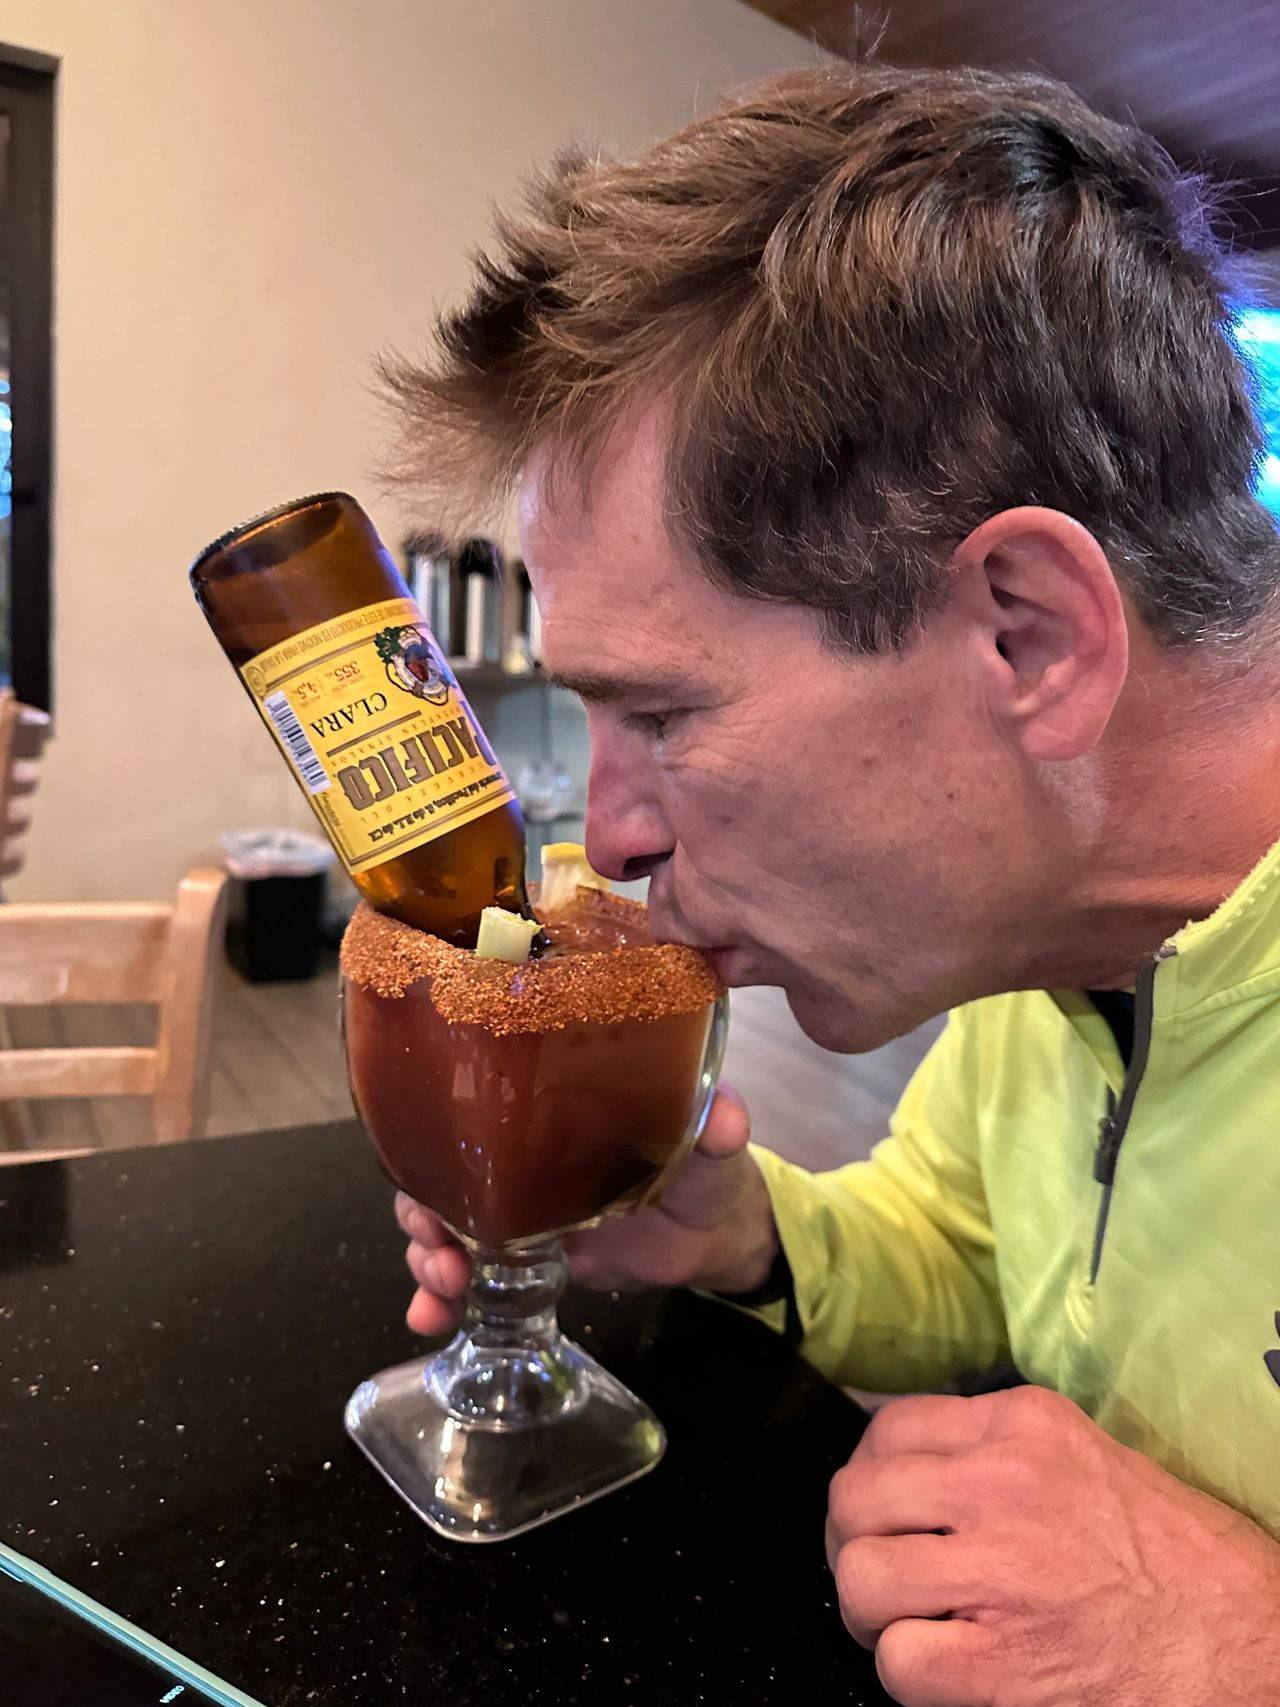 Gene enjoying a Mexican beverage.